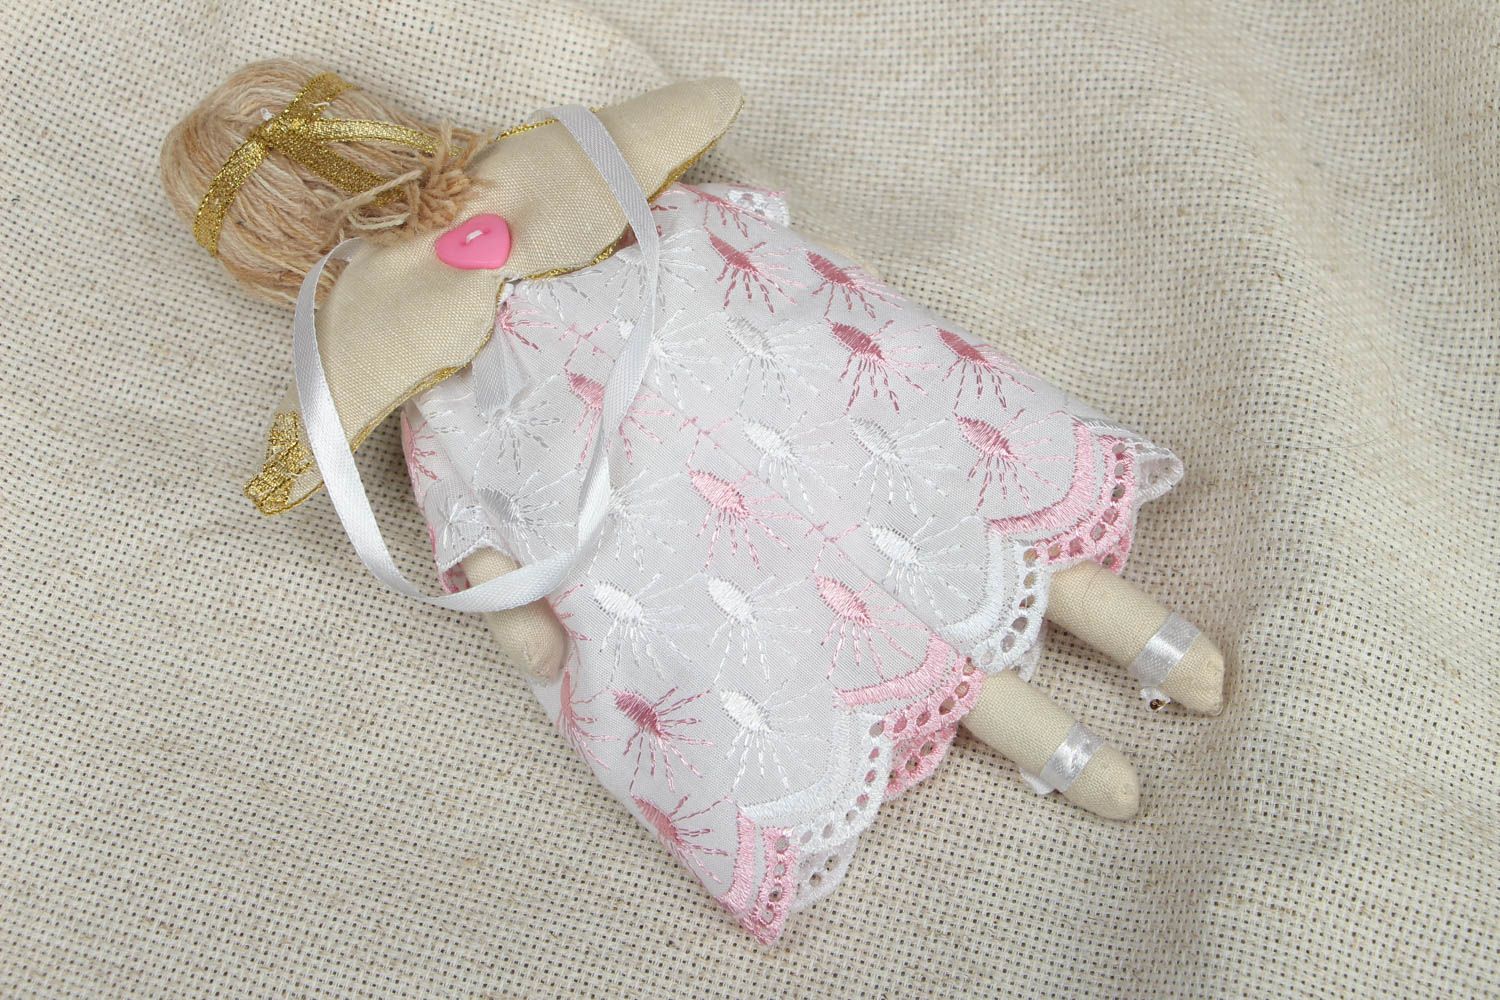 Fabric angel doll in white sun dress photo 3